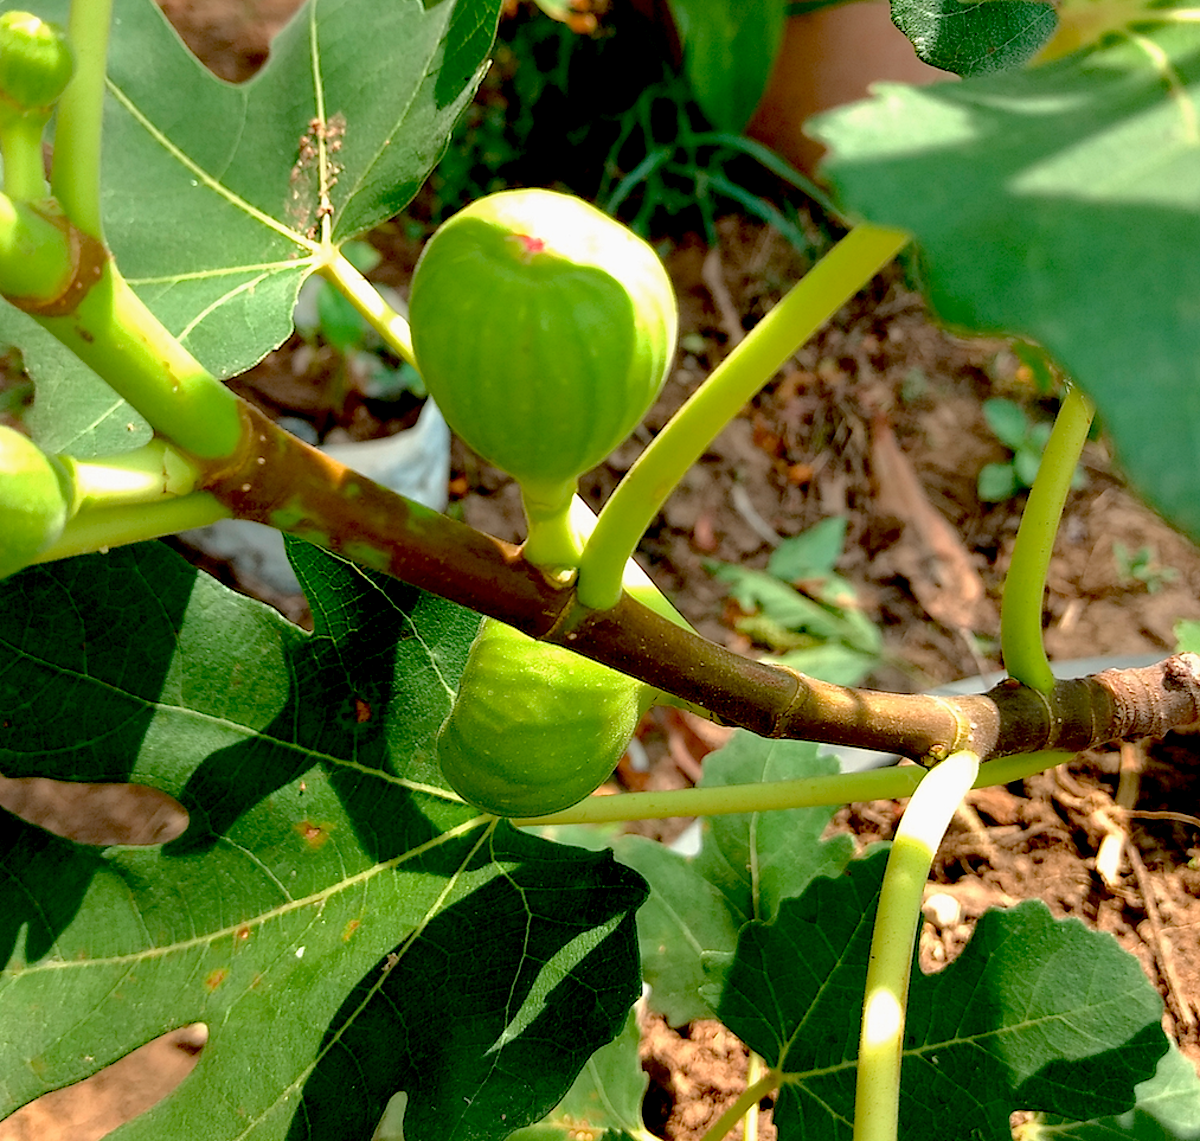 fig growing - Farming Thailand Forum - Thailand News, Travel Forum - ASEAN NOW